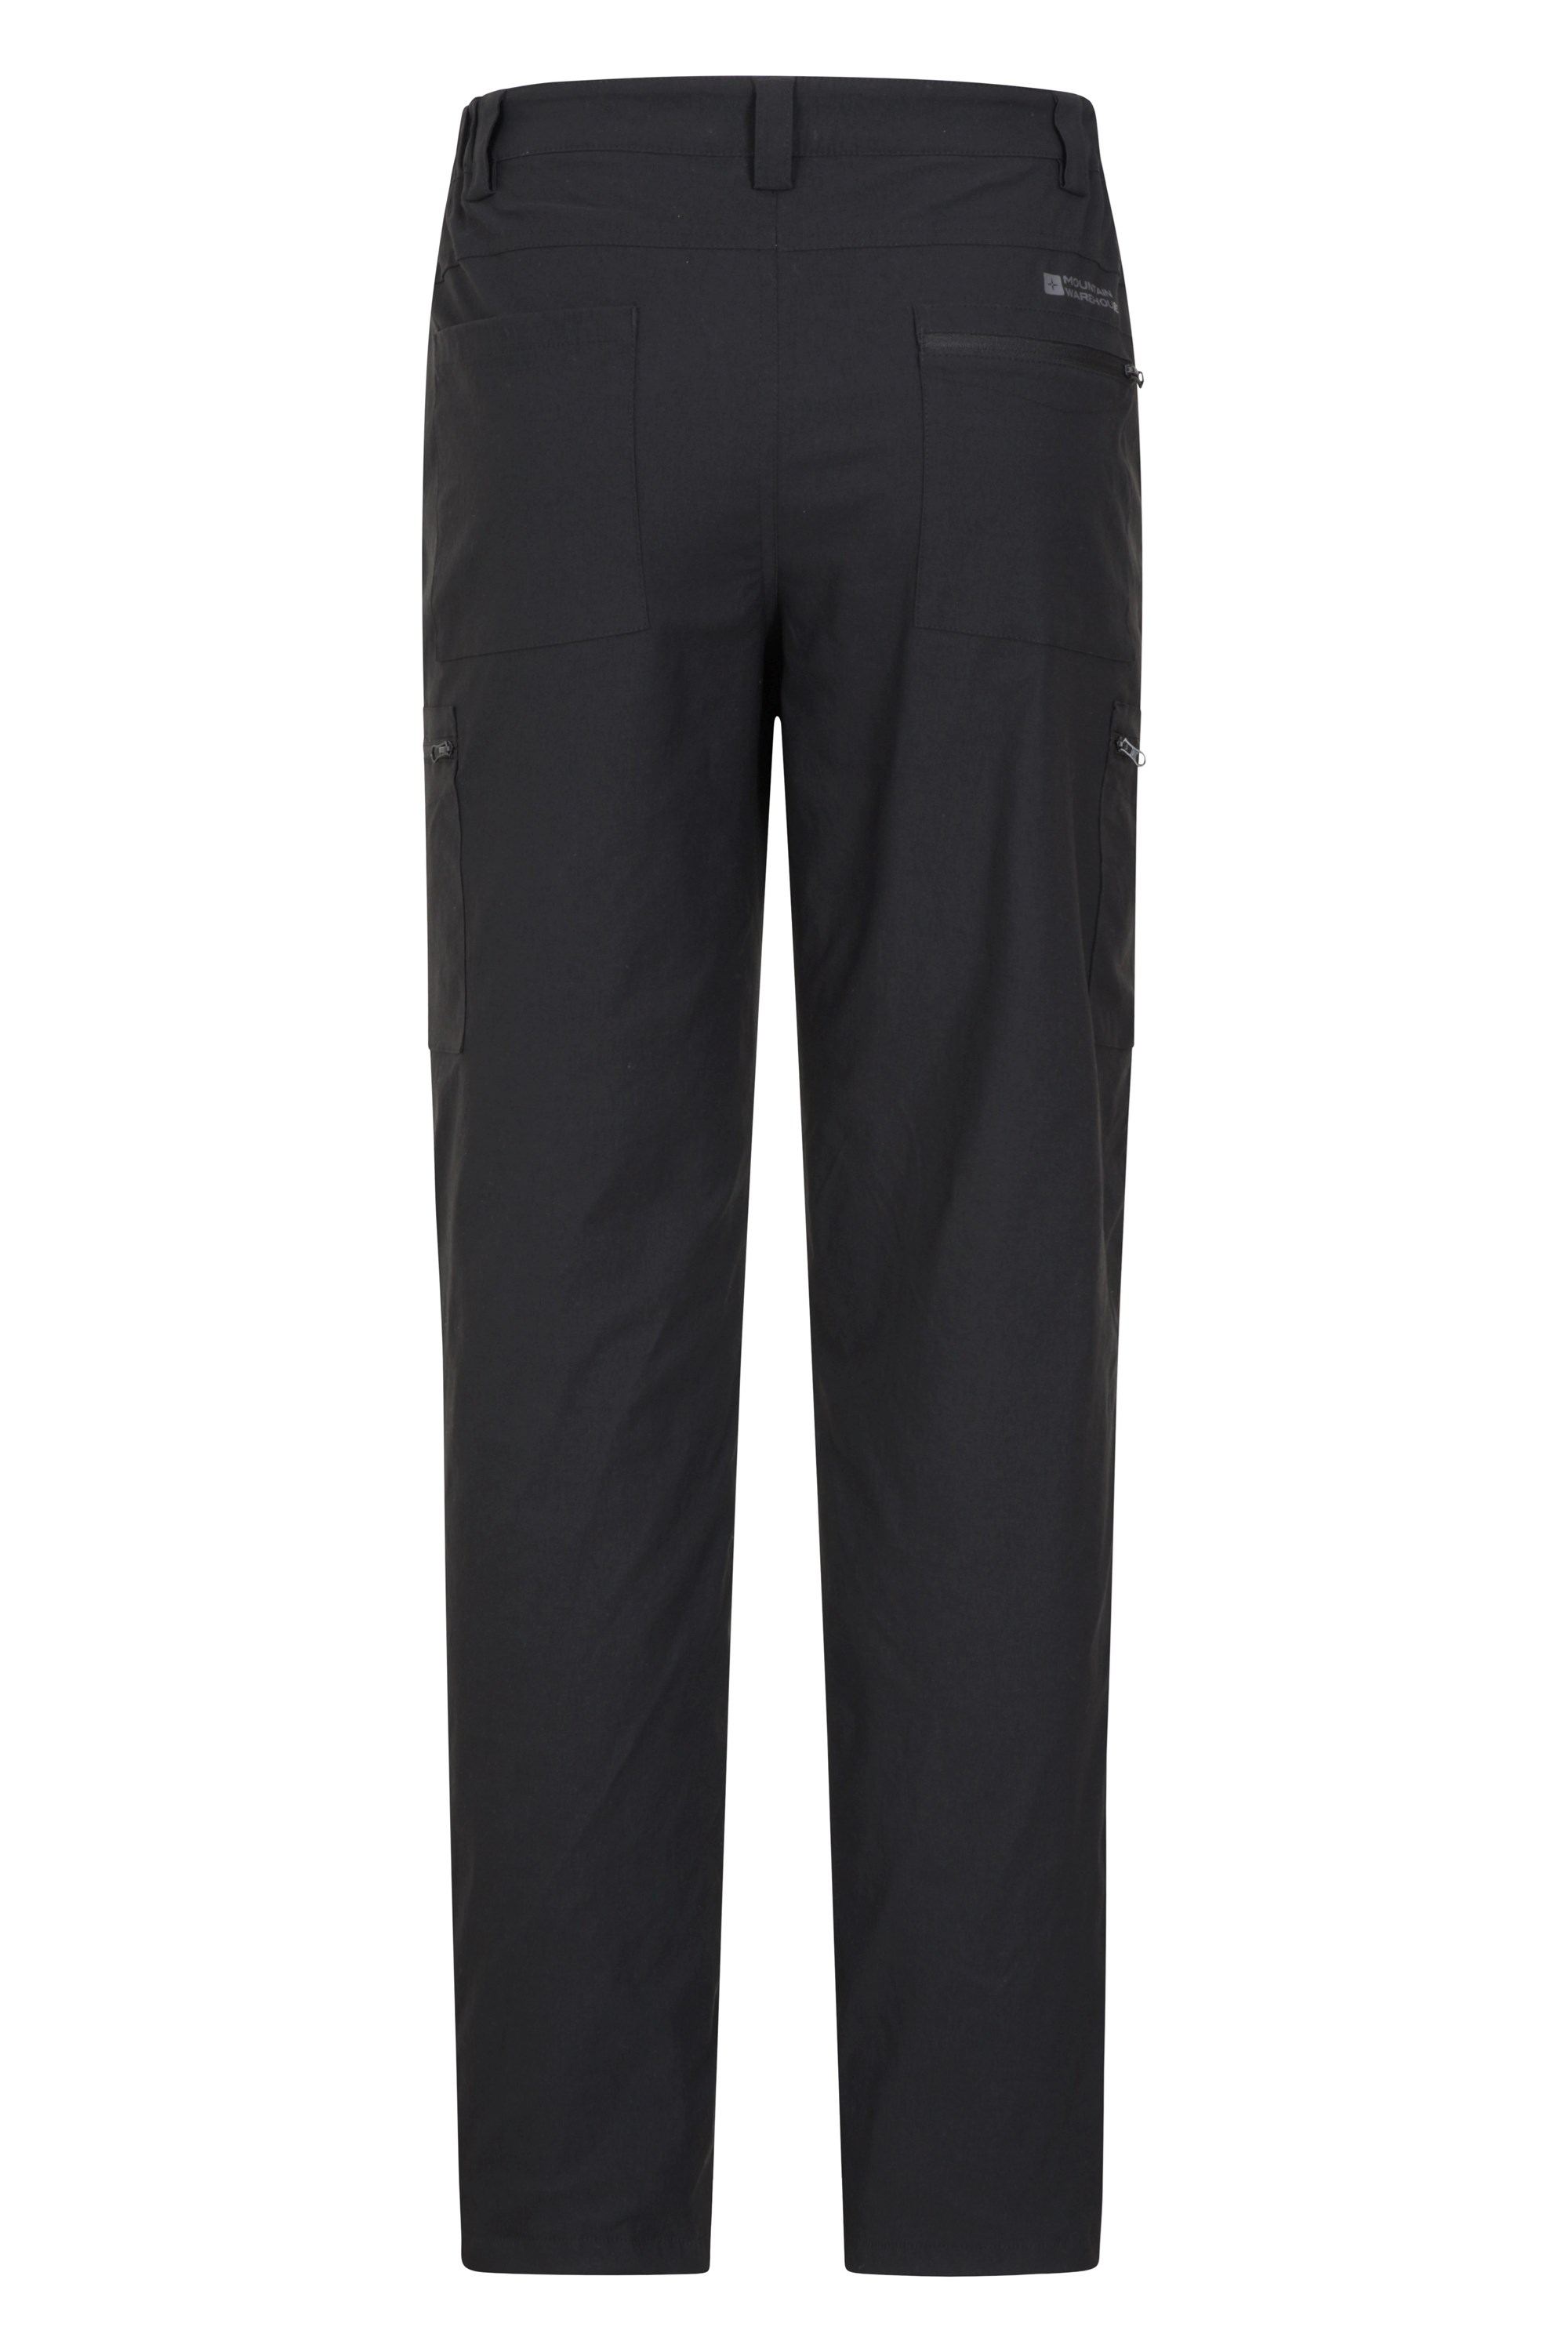 Mens Fleece Trousers Joggers Open Hem Bottoms Plain Zip Pocket Track Pants  M-5XL | eBay